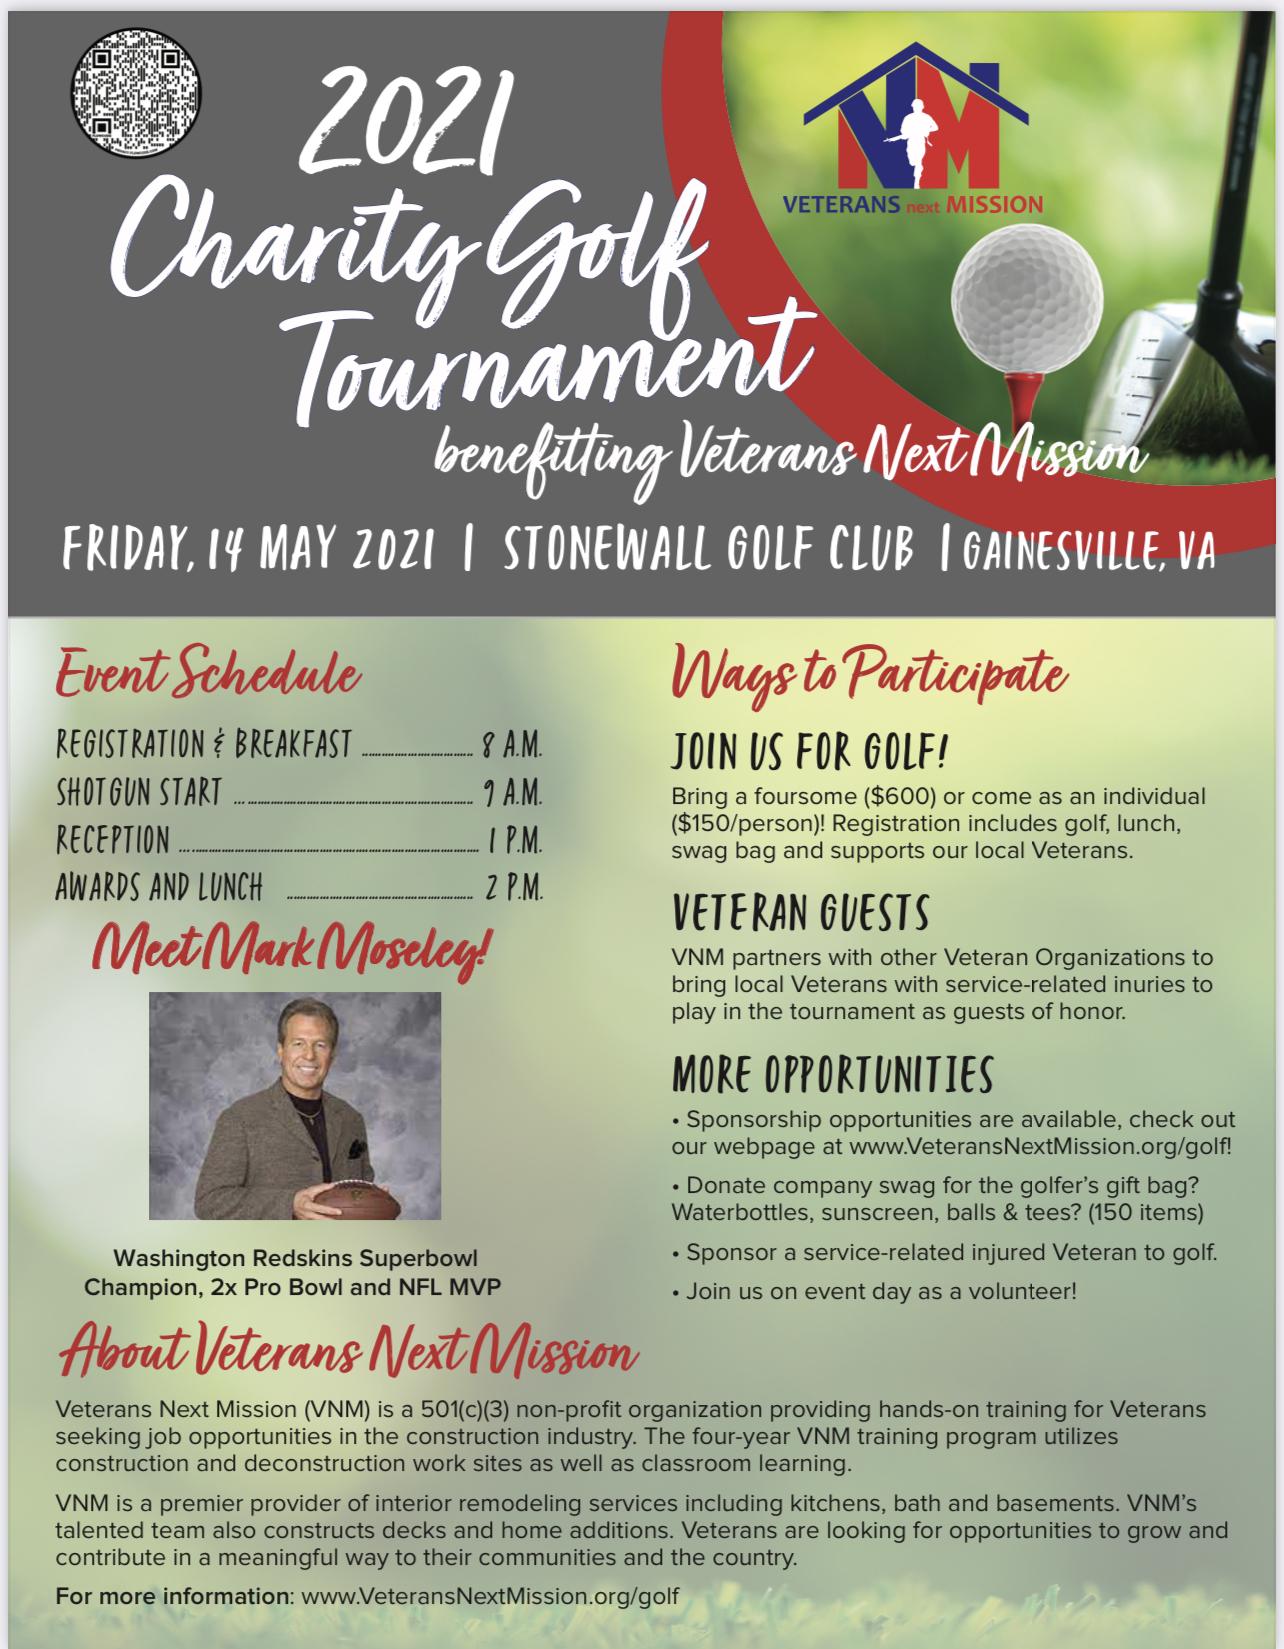 2021 Annual Charity Golf Tournament